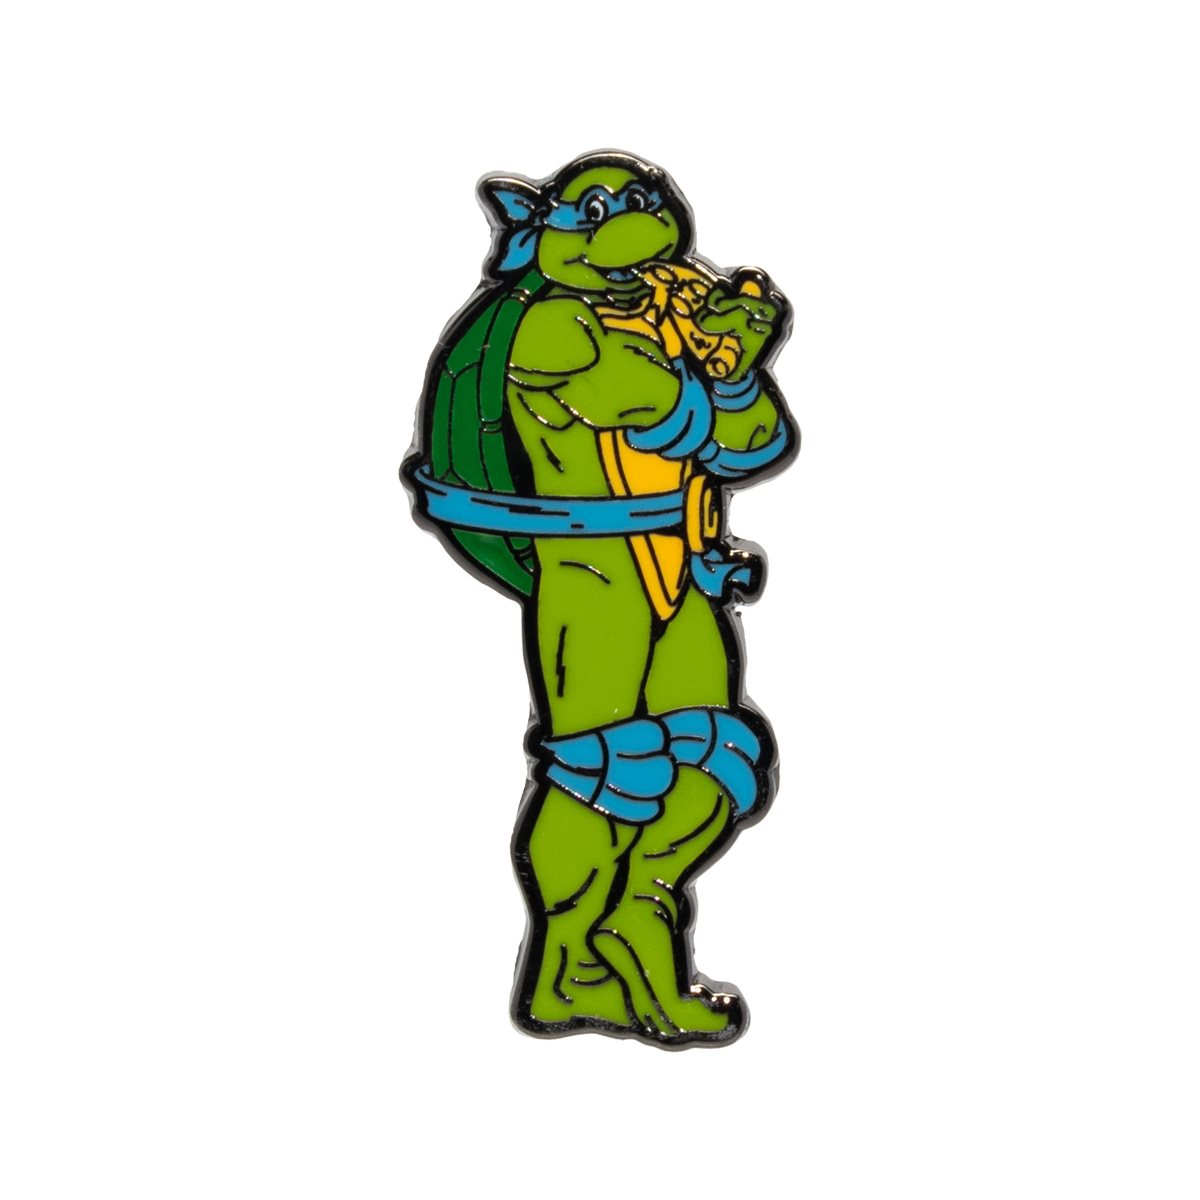 Details about   Enamel Pin Badge ☆ Teenage Mutant Ninja Toy Turtles Style Pin Sewer Head's